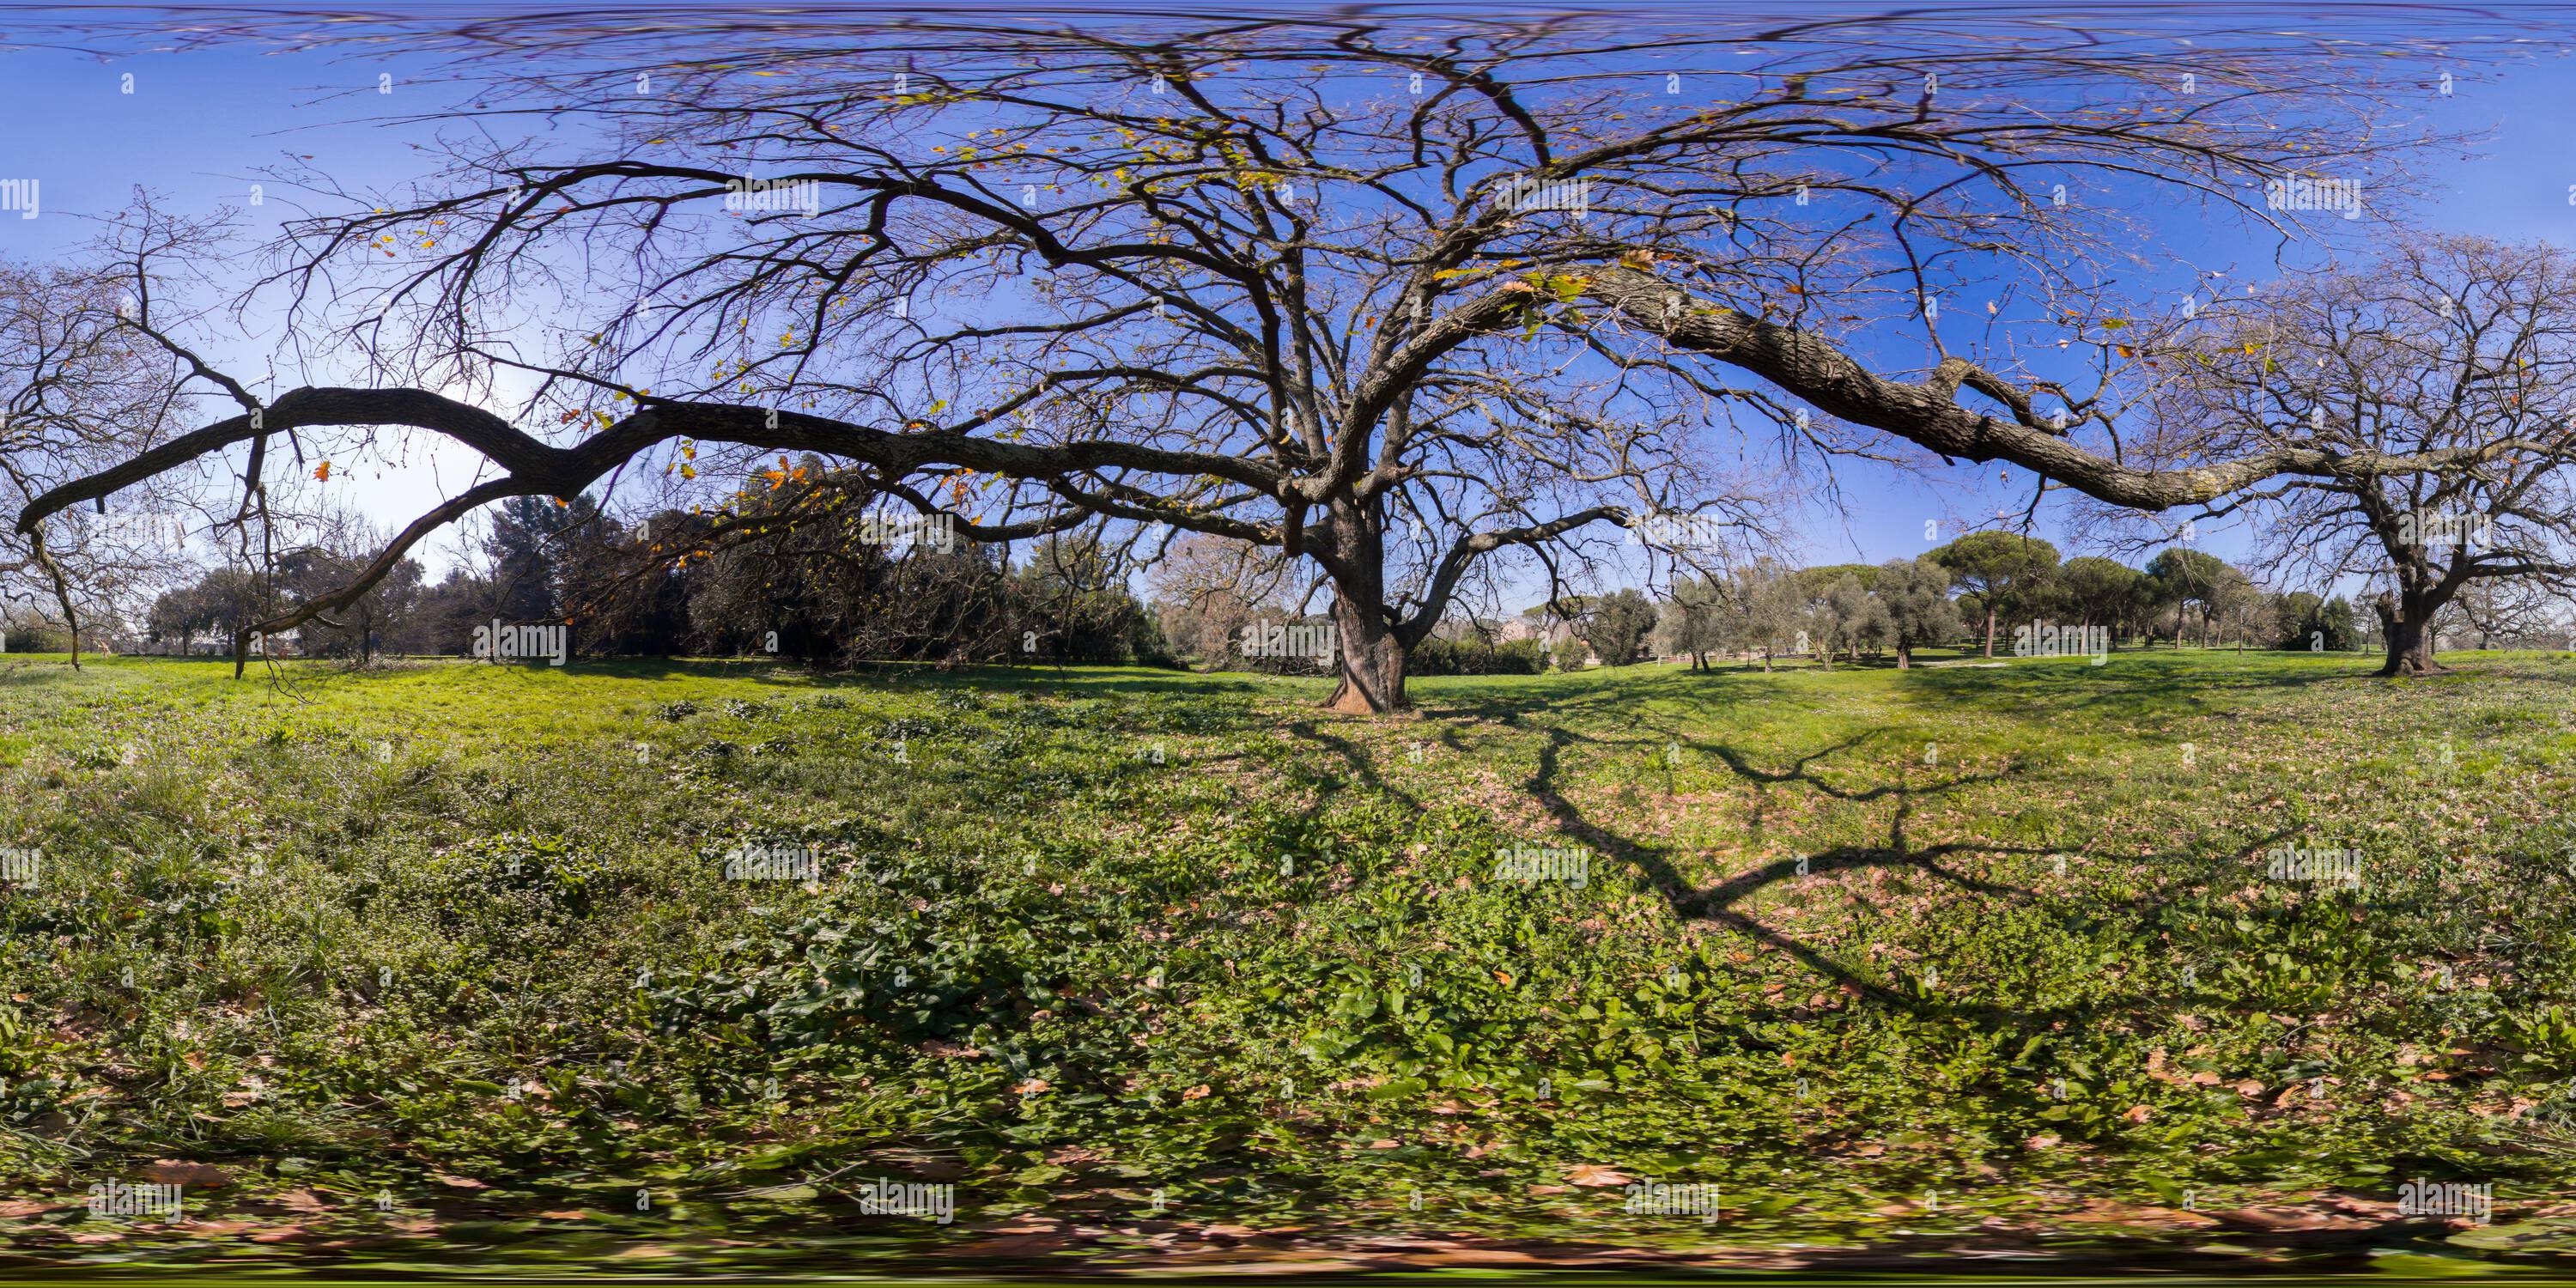 360 Grad Panorama Ansicht von Natur in der Villa Doria Pamphilj - Rom - 360-Grad-Blick